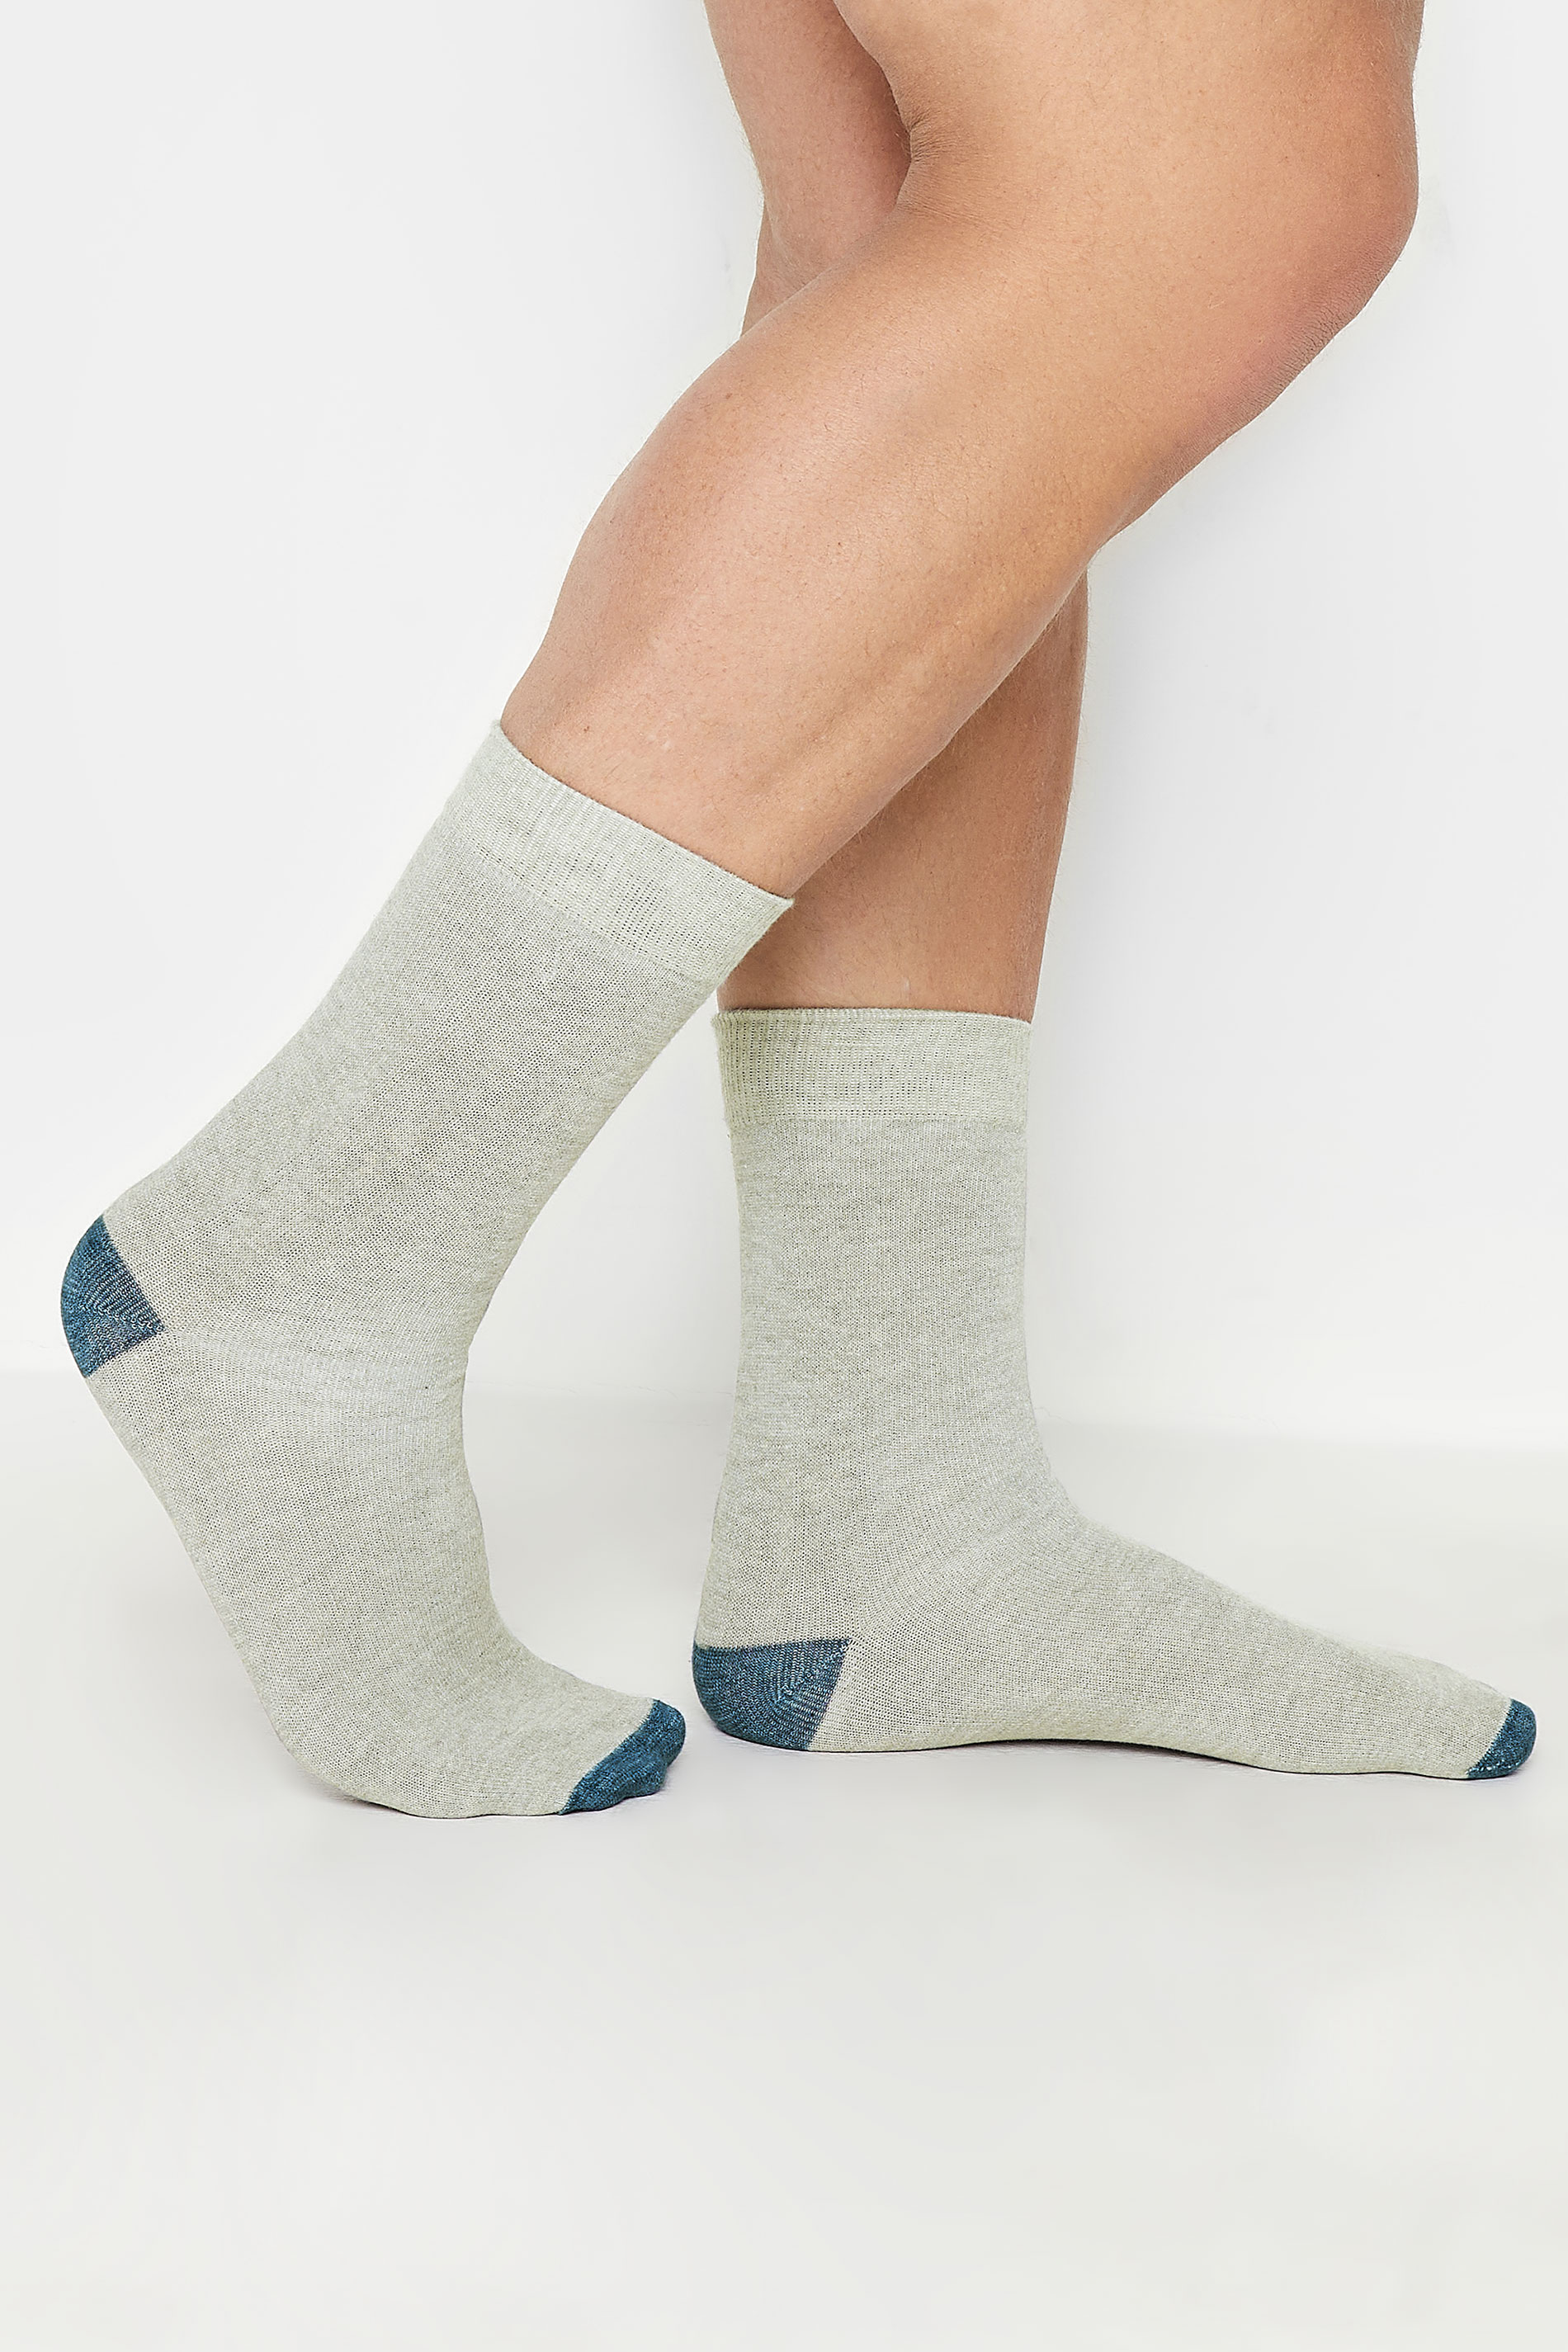 BadRhino Blue 5 Pack Heel & Toe Socks | BadRhino 2